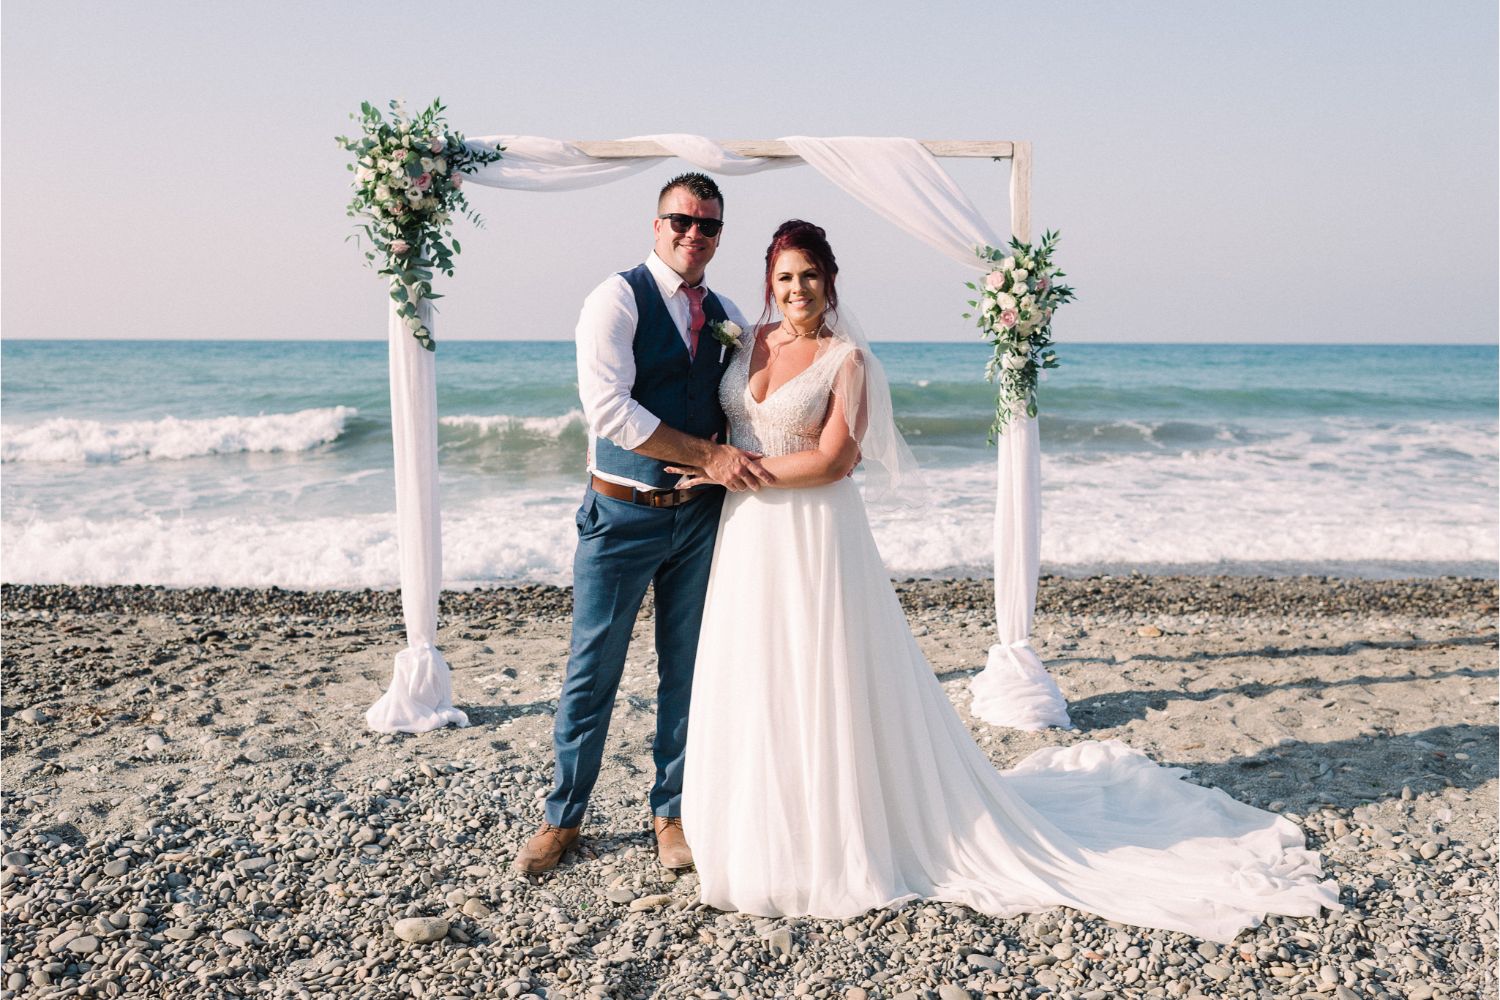 newlyweds at beach wedding ceremony in Crete